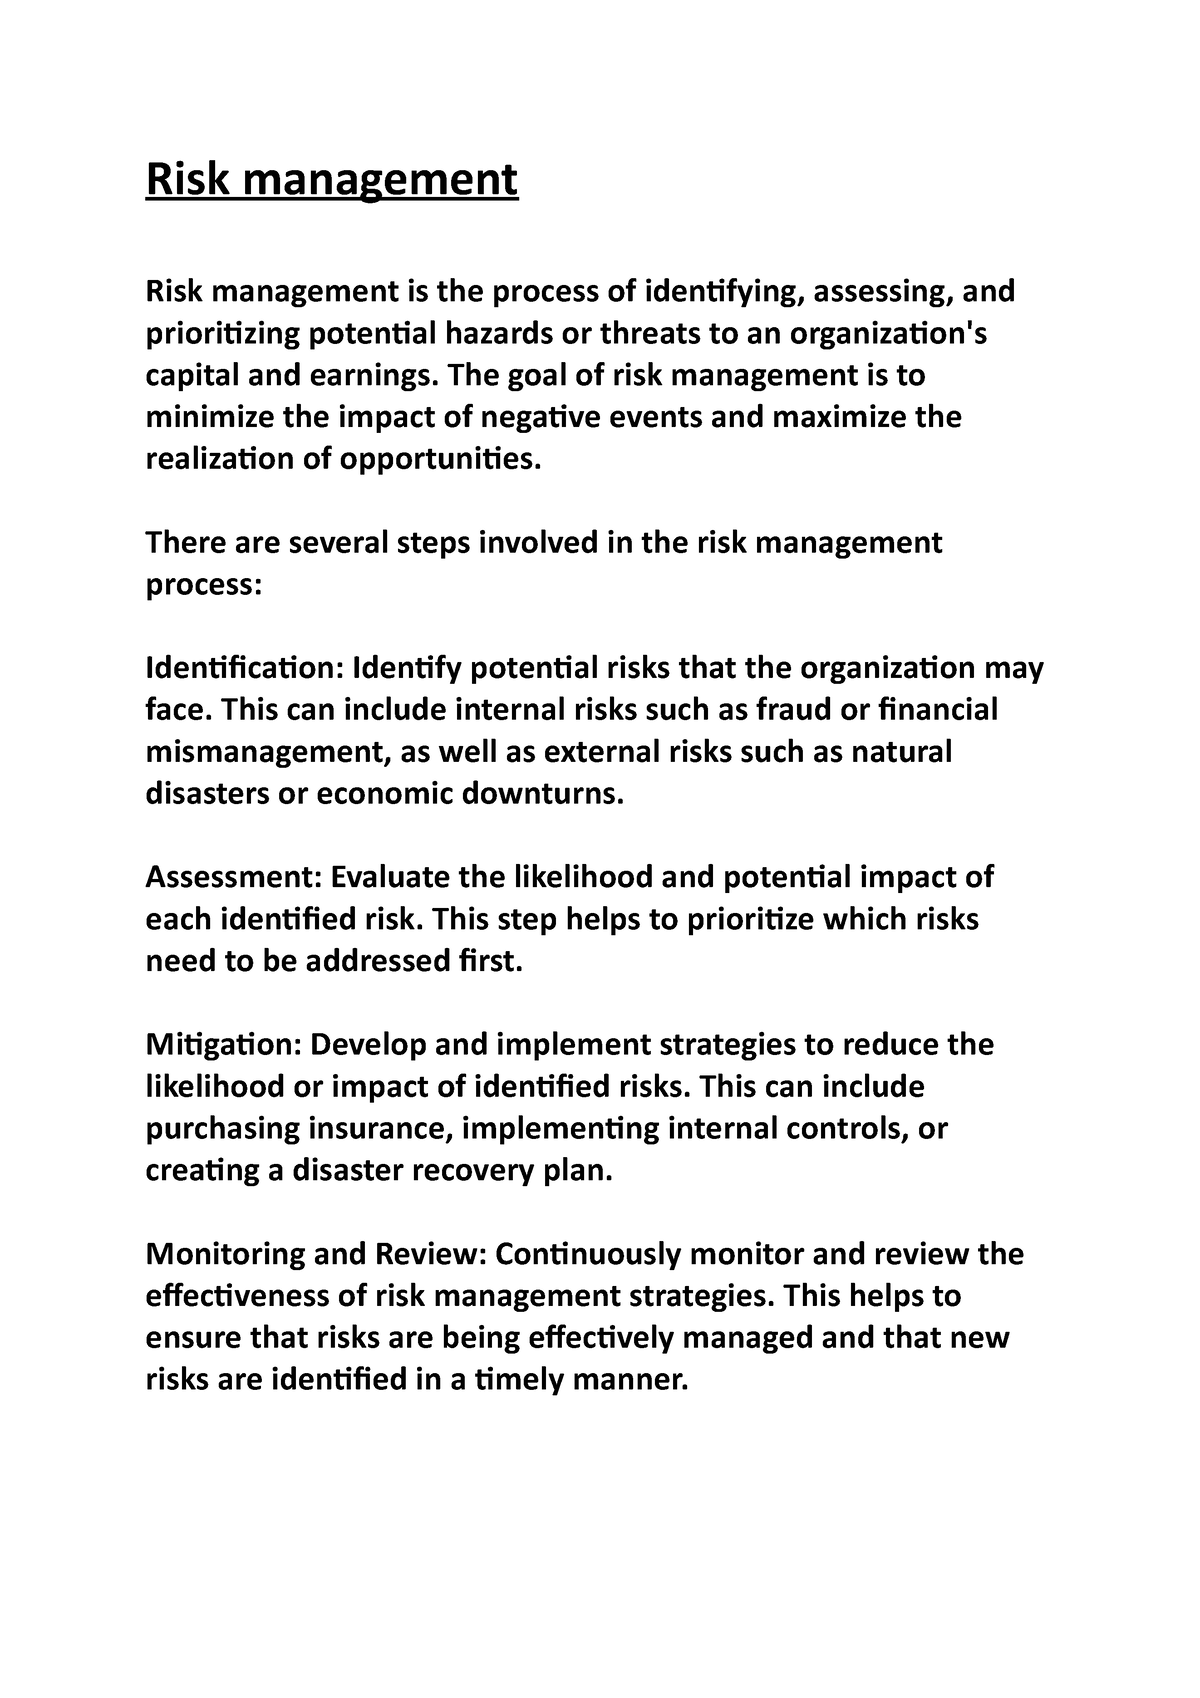 dissertation on risk management